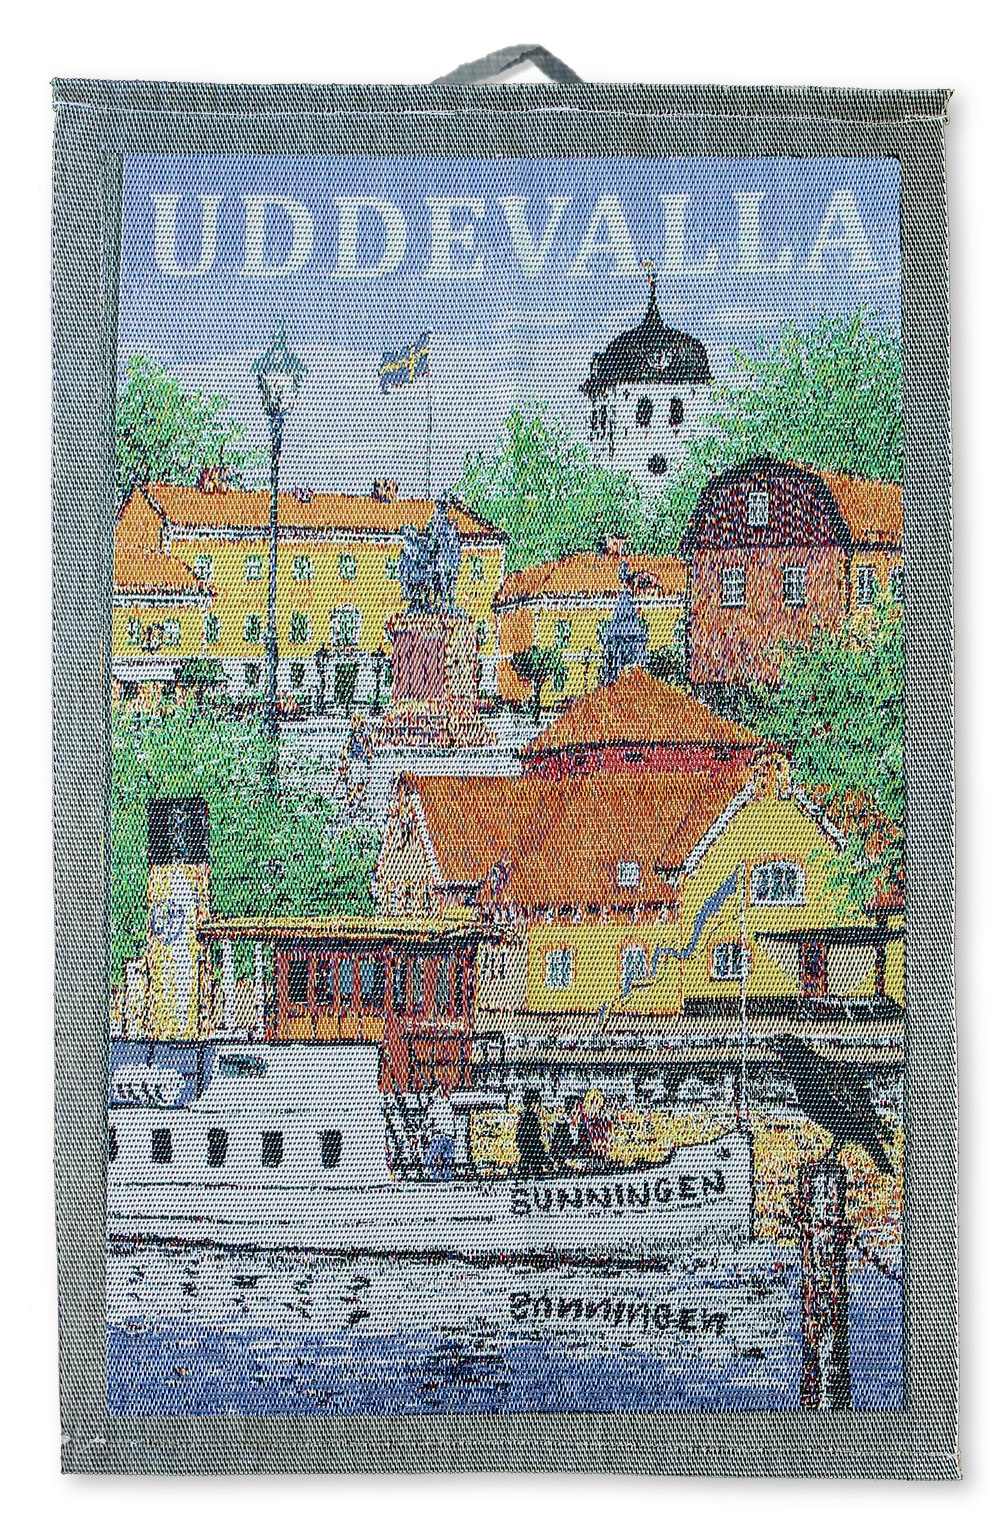 Handduk Uddevalla 35 x 50 cm